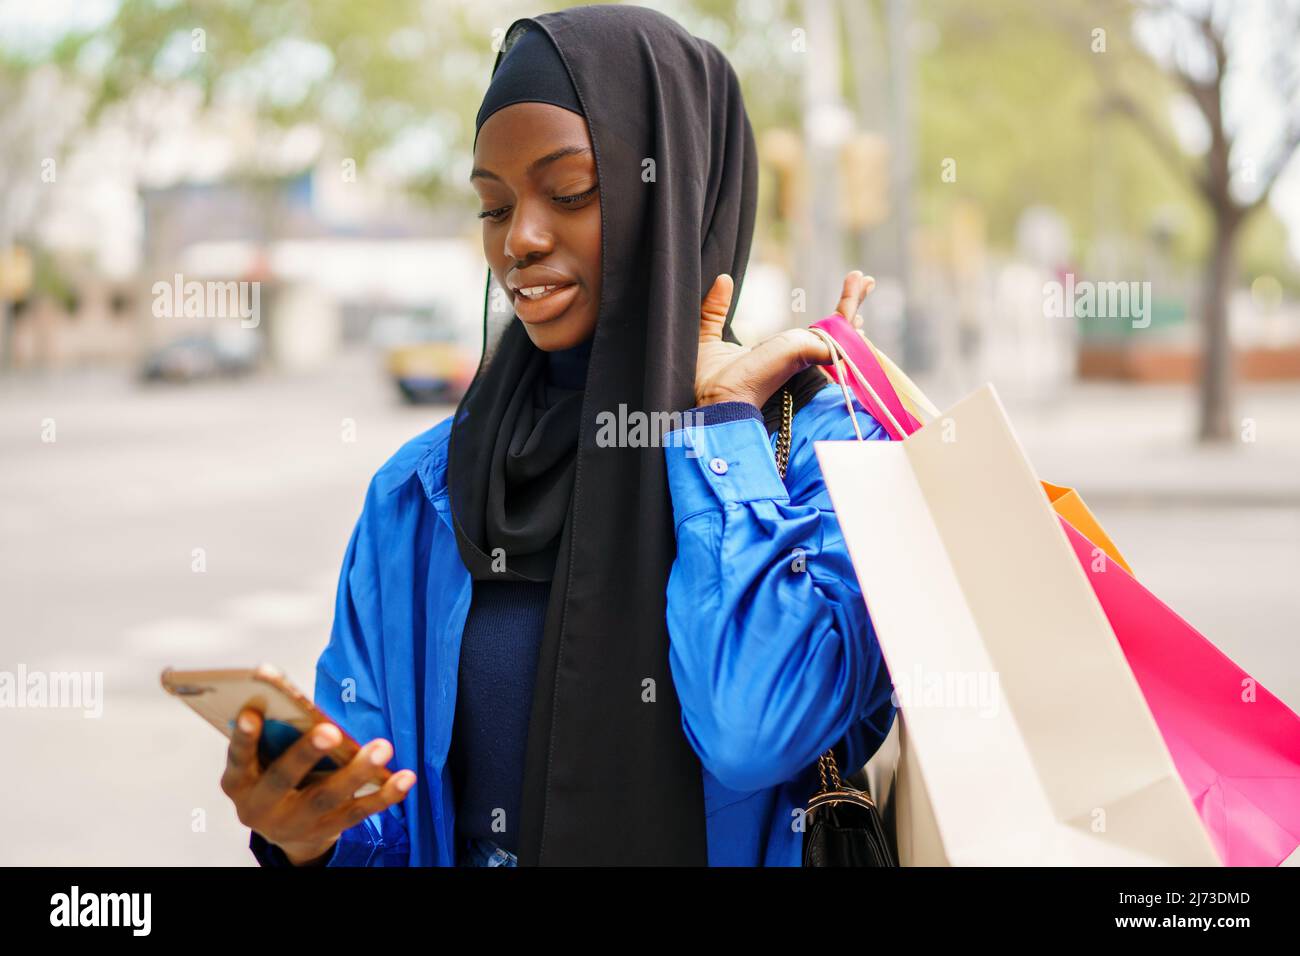 Muslim shopper texting on smartphone Stock Photo